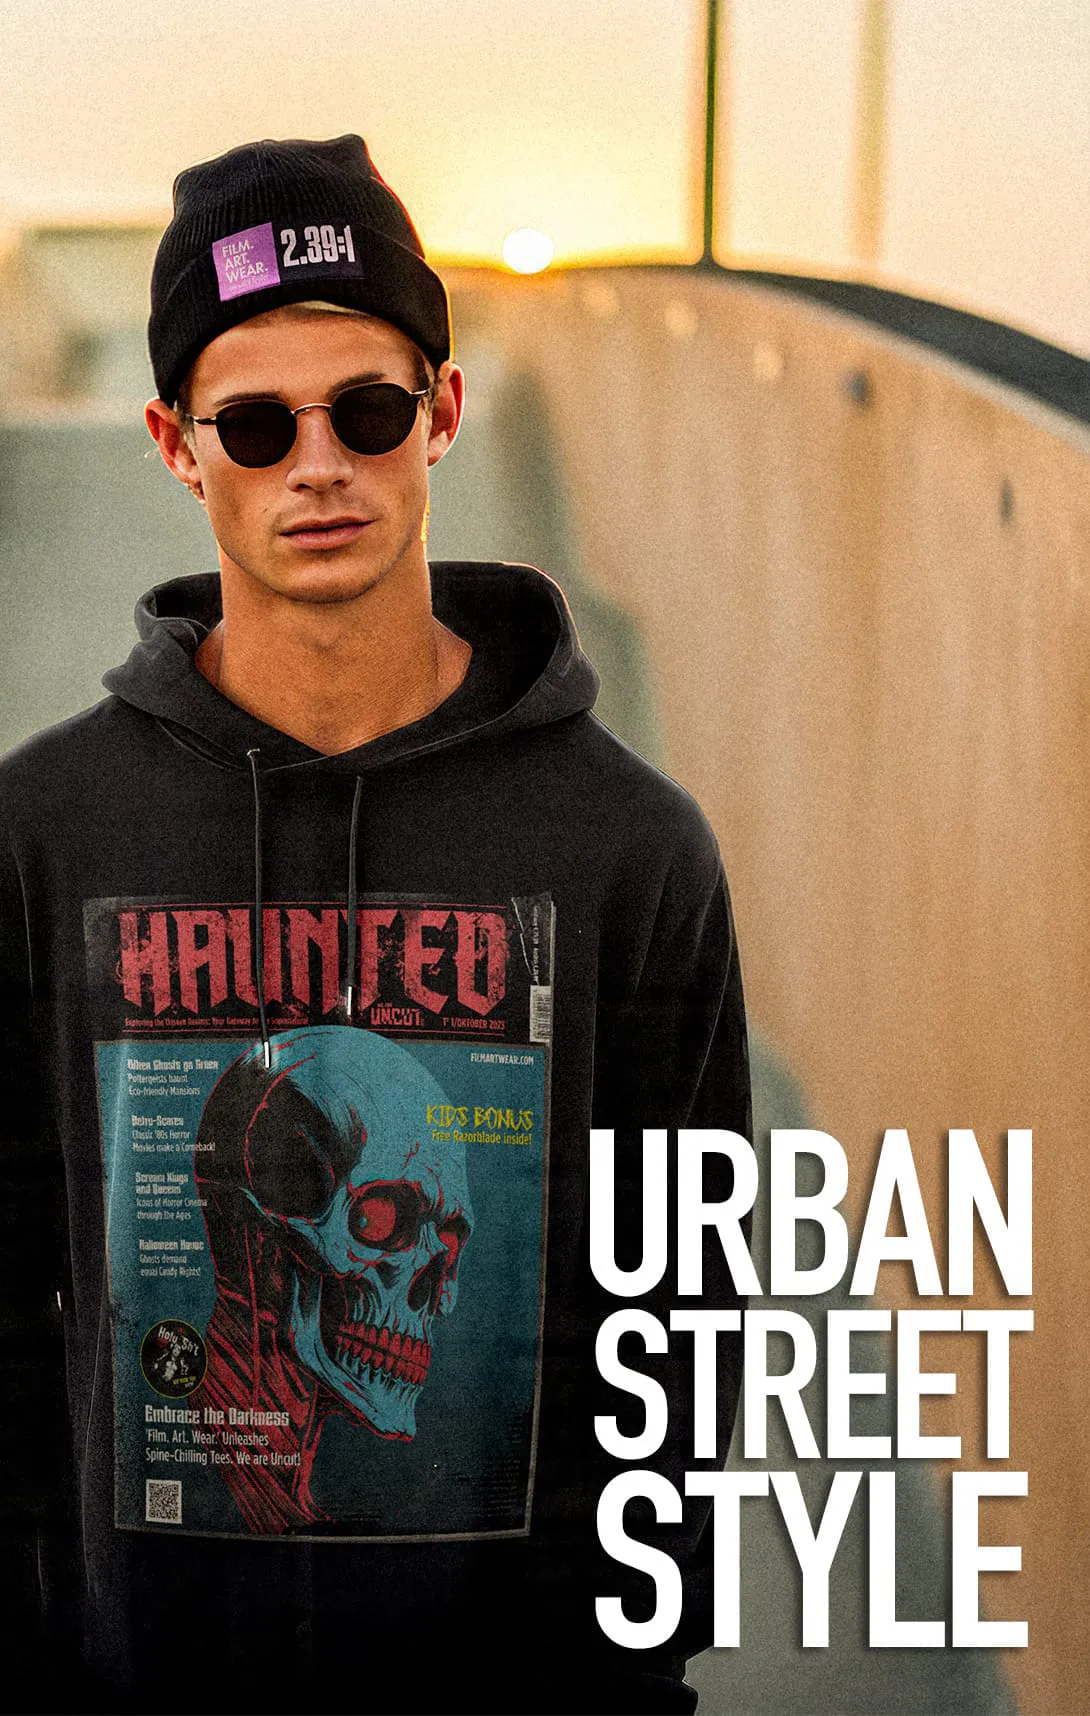 streetwear-brand-jordan-urban-artwork